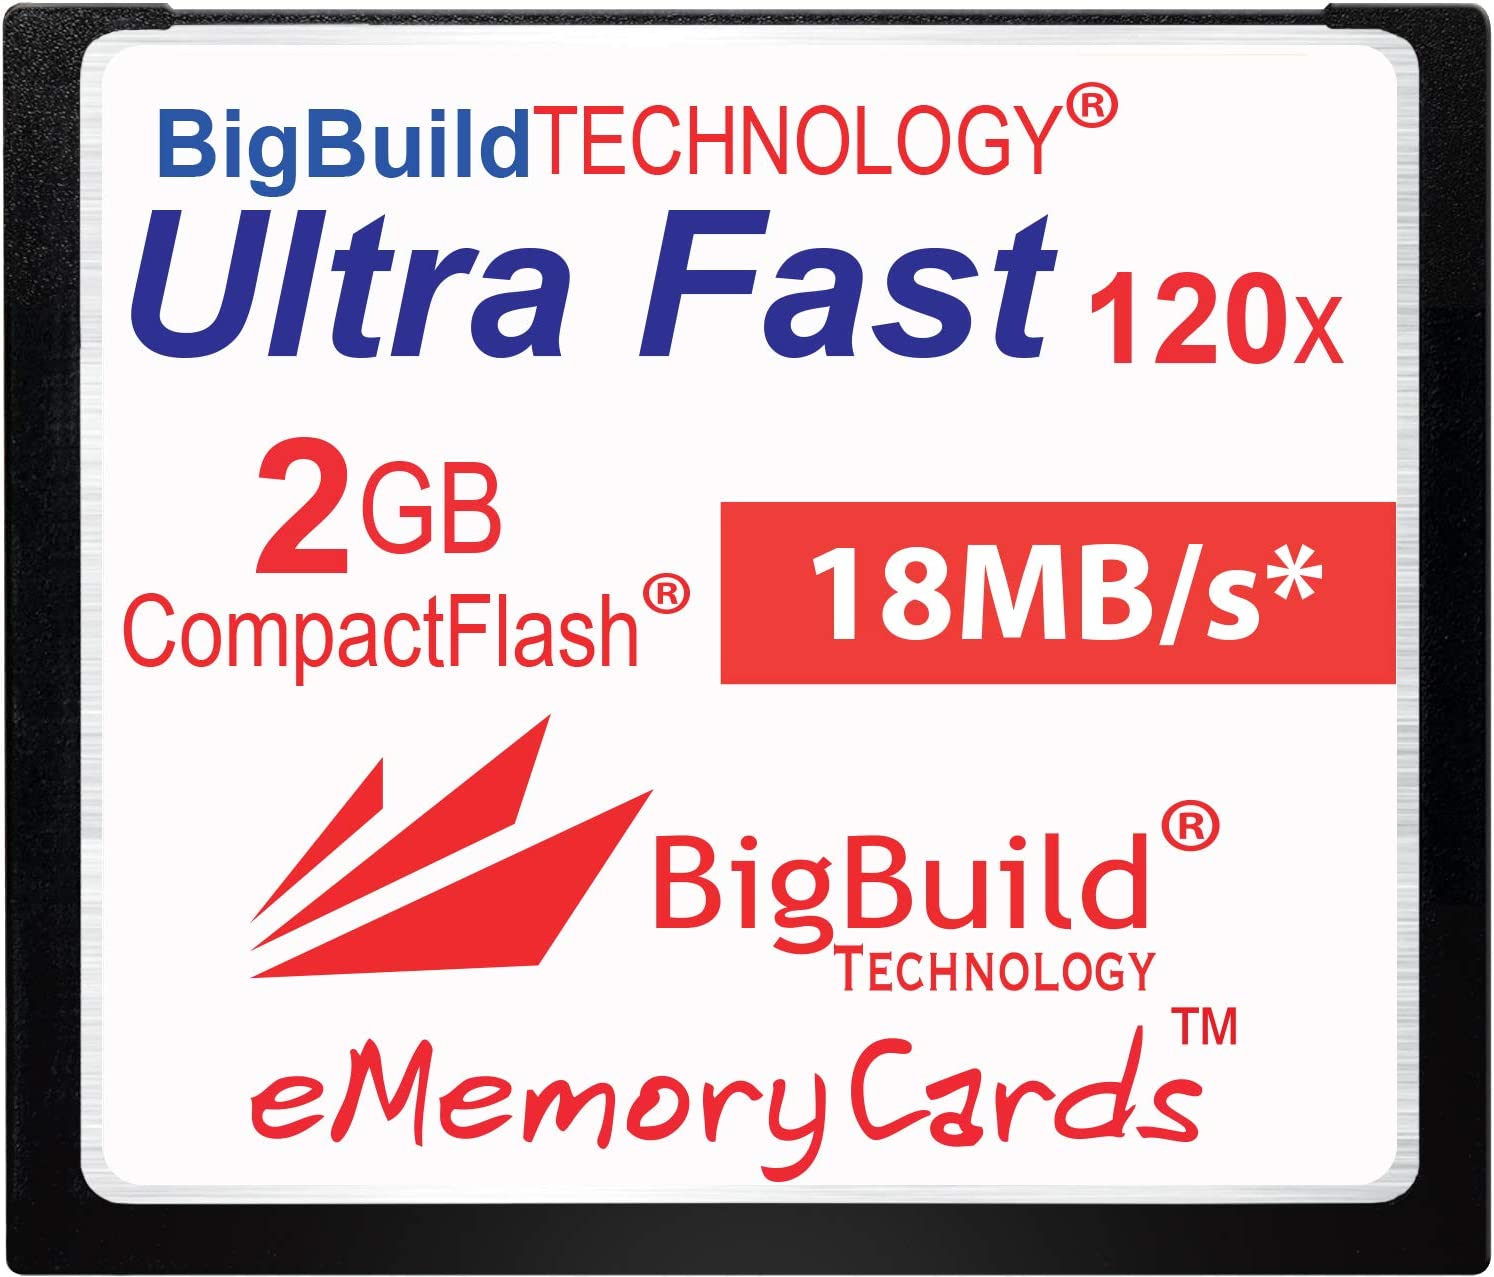 eMemory Card 2GB UltraFast 18MB/s 캐논 10D/20D/30D/40D/50D/1D/1D/5D/5D/7D Mark I/III/III/IV, 니콘 D, 올림푸스 E, 소니 알파, 레이커스 카메라